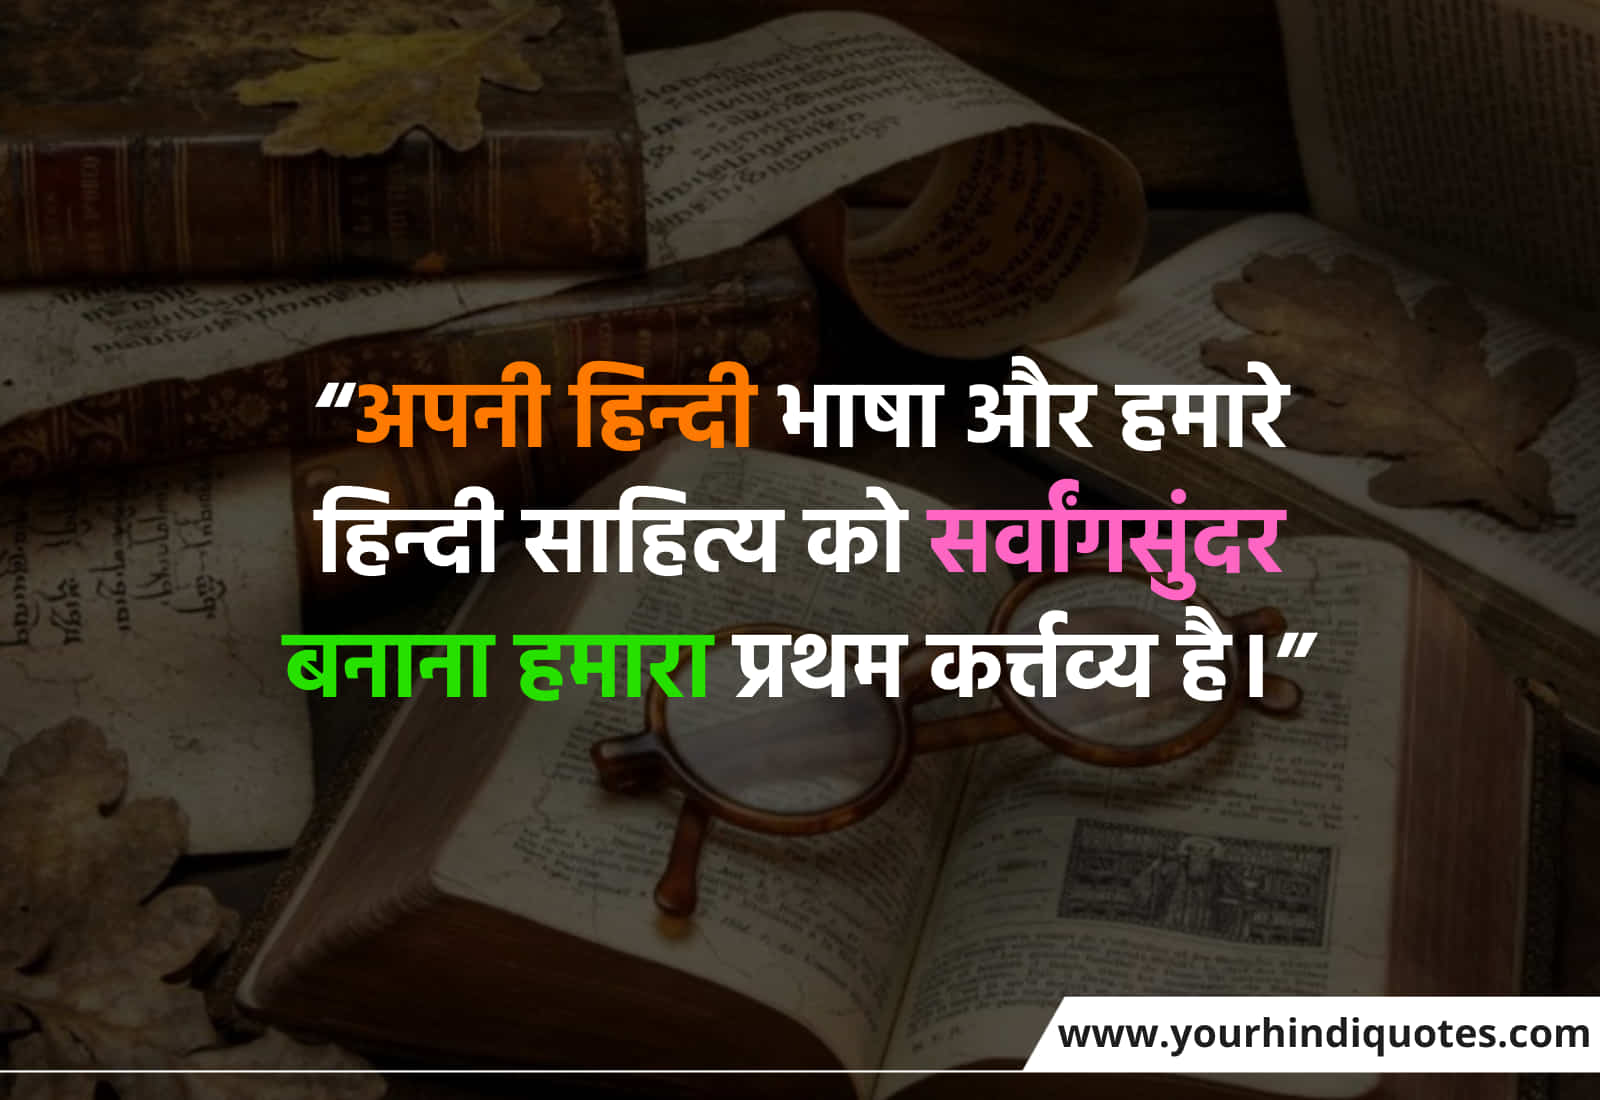 Hindi Diwas Best Quotes In Hindi